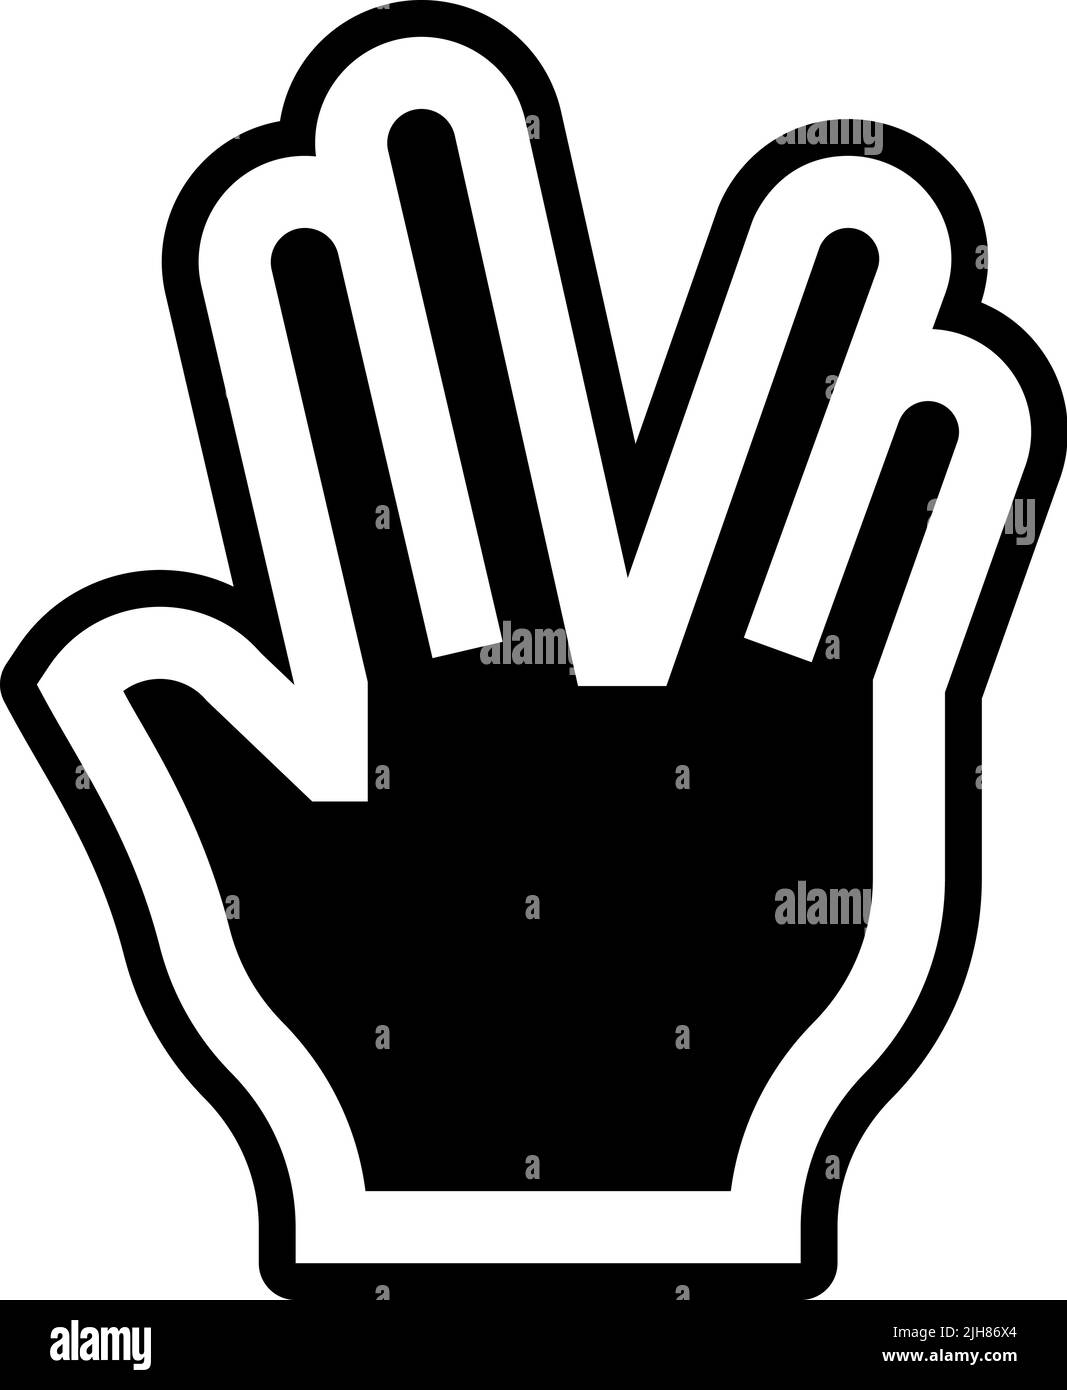 Hand gestures vulcan salute icon Stock Vector